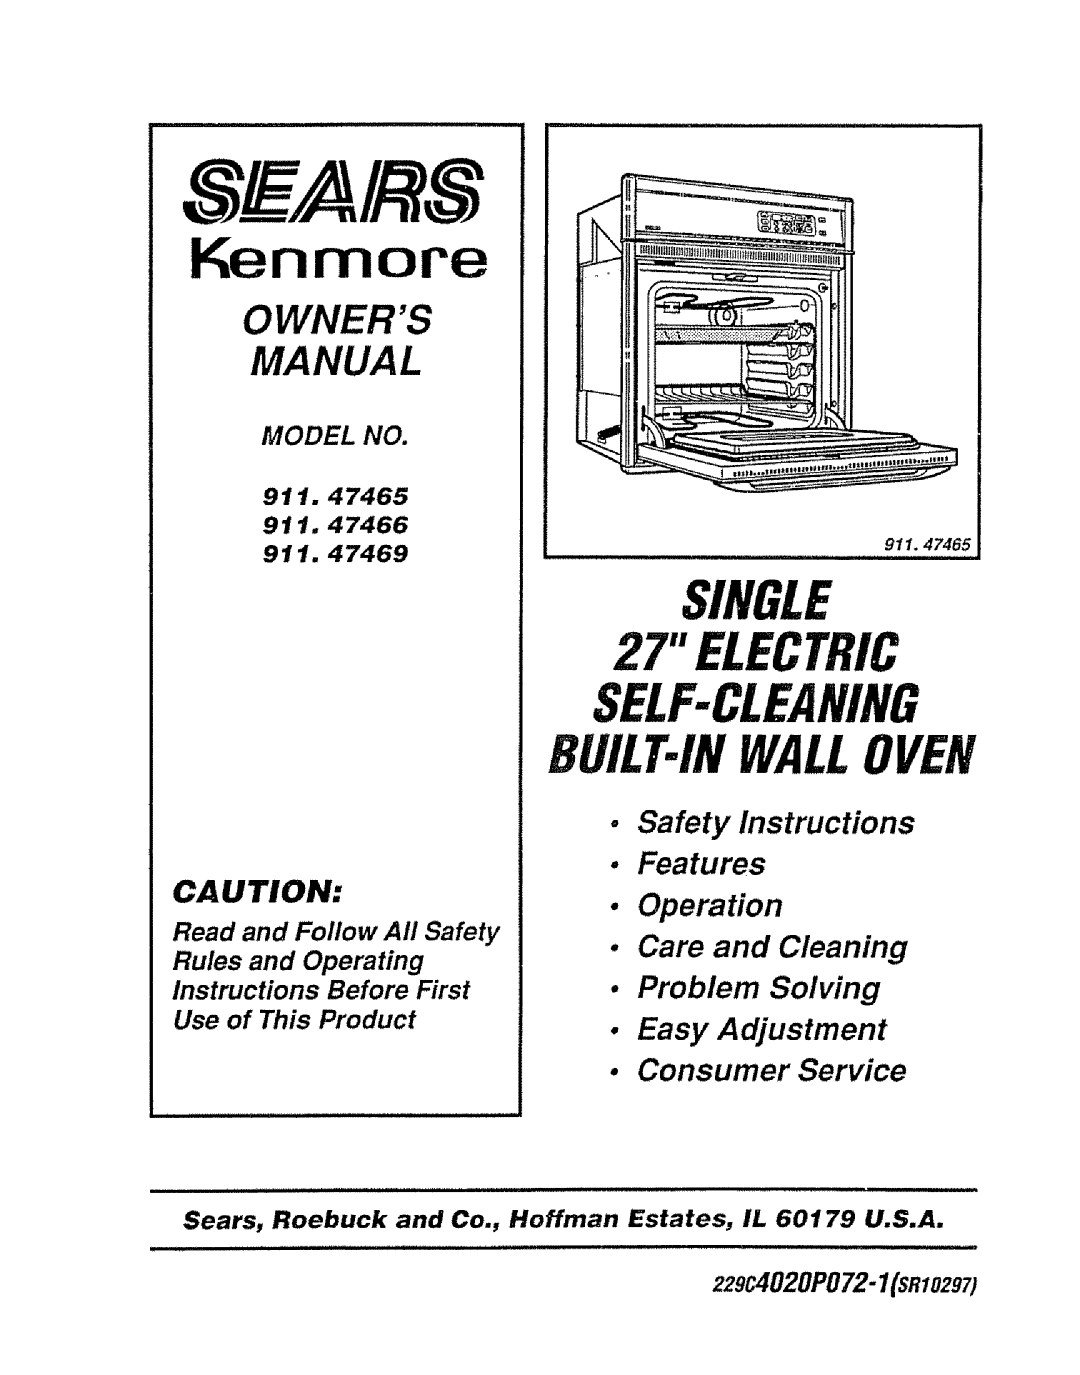 Sears 911.47469 manual Kenmore, SINGLE 27 ELECTRIC, SELF-CLEANING BUlLT-INWALL 0 VEN, Owners Manual, Model No, illl, lIHHl 